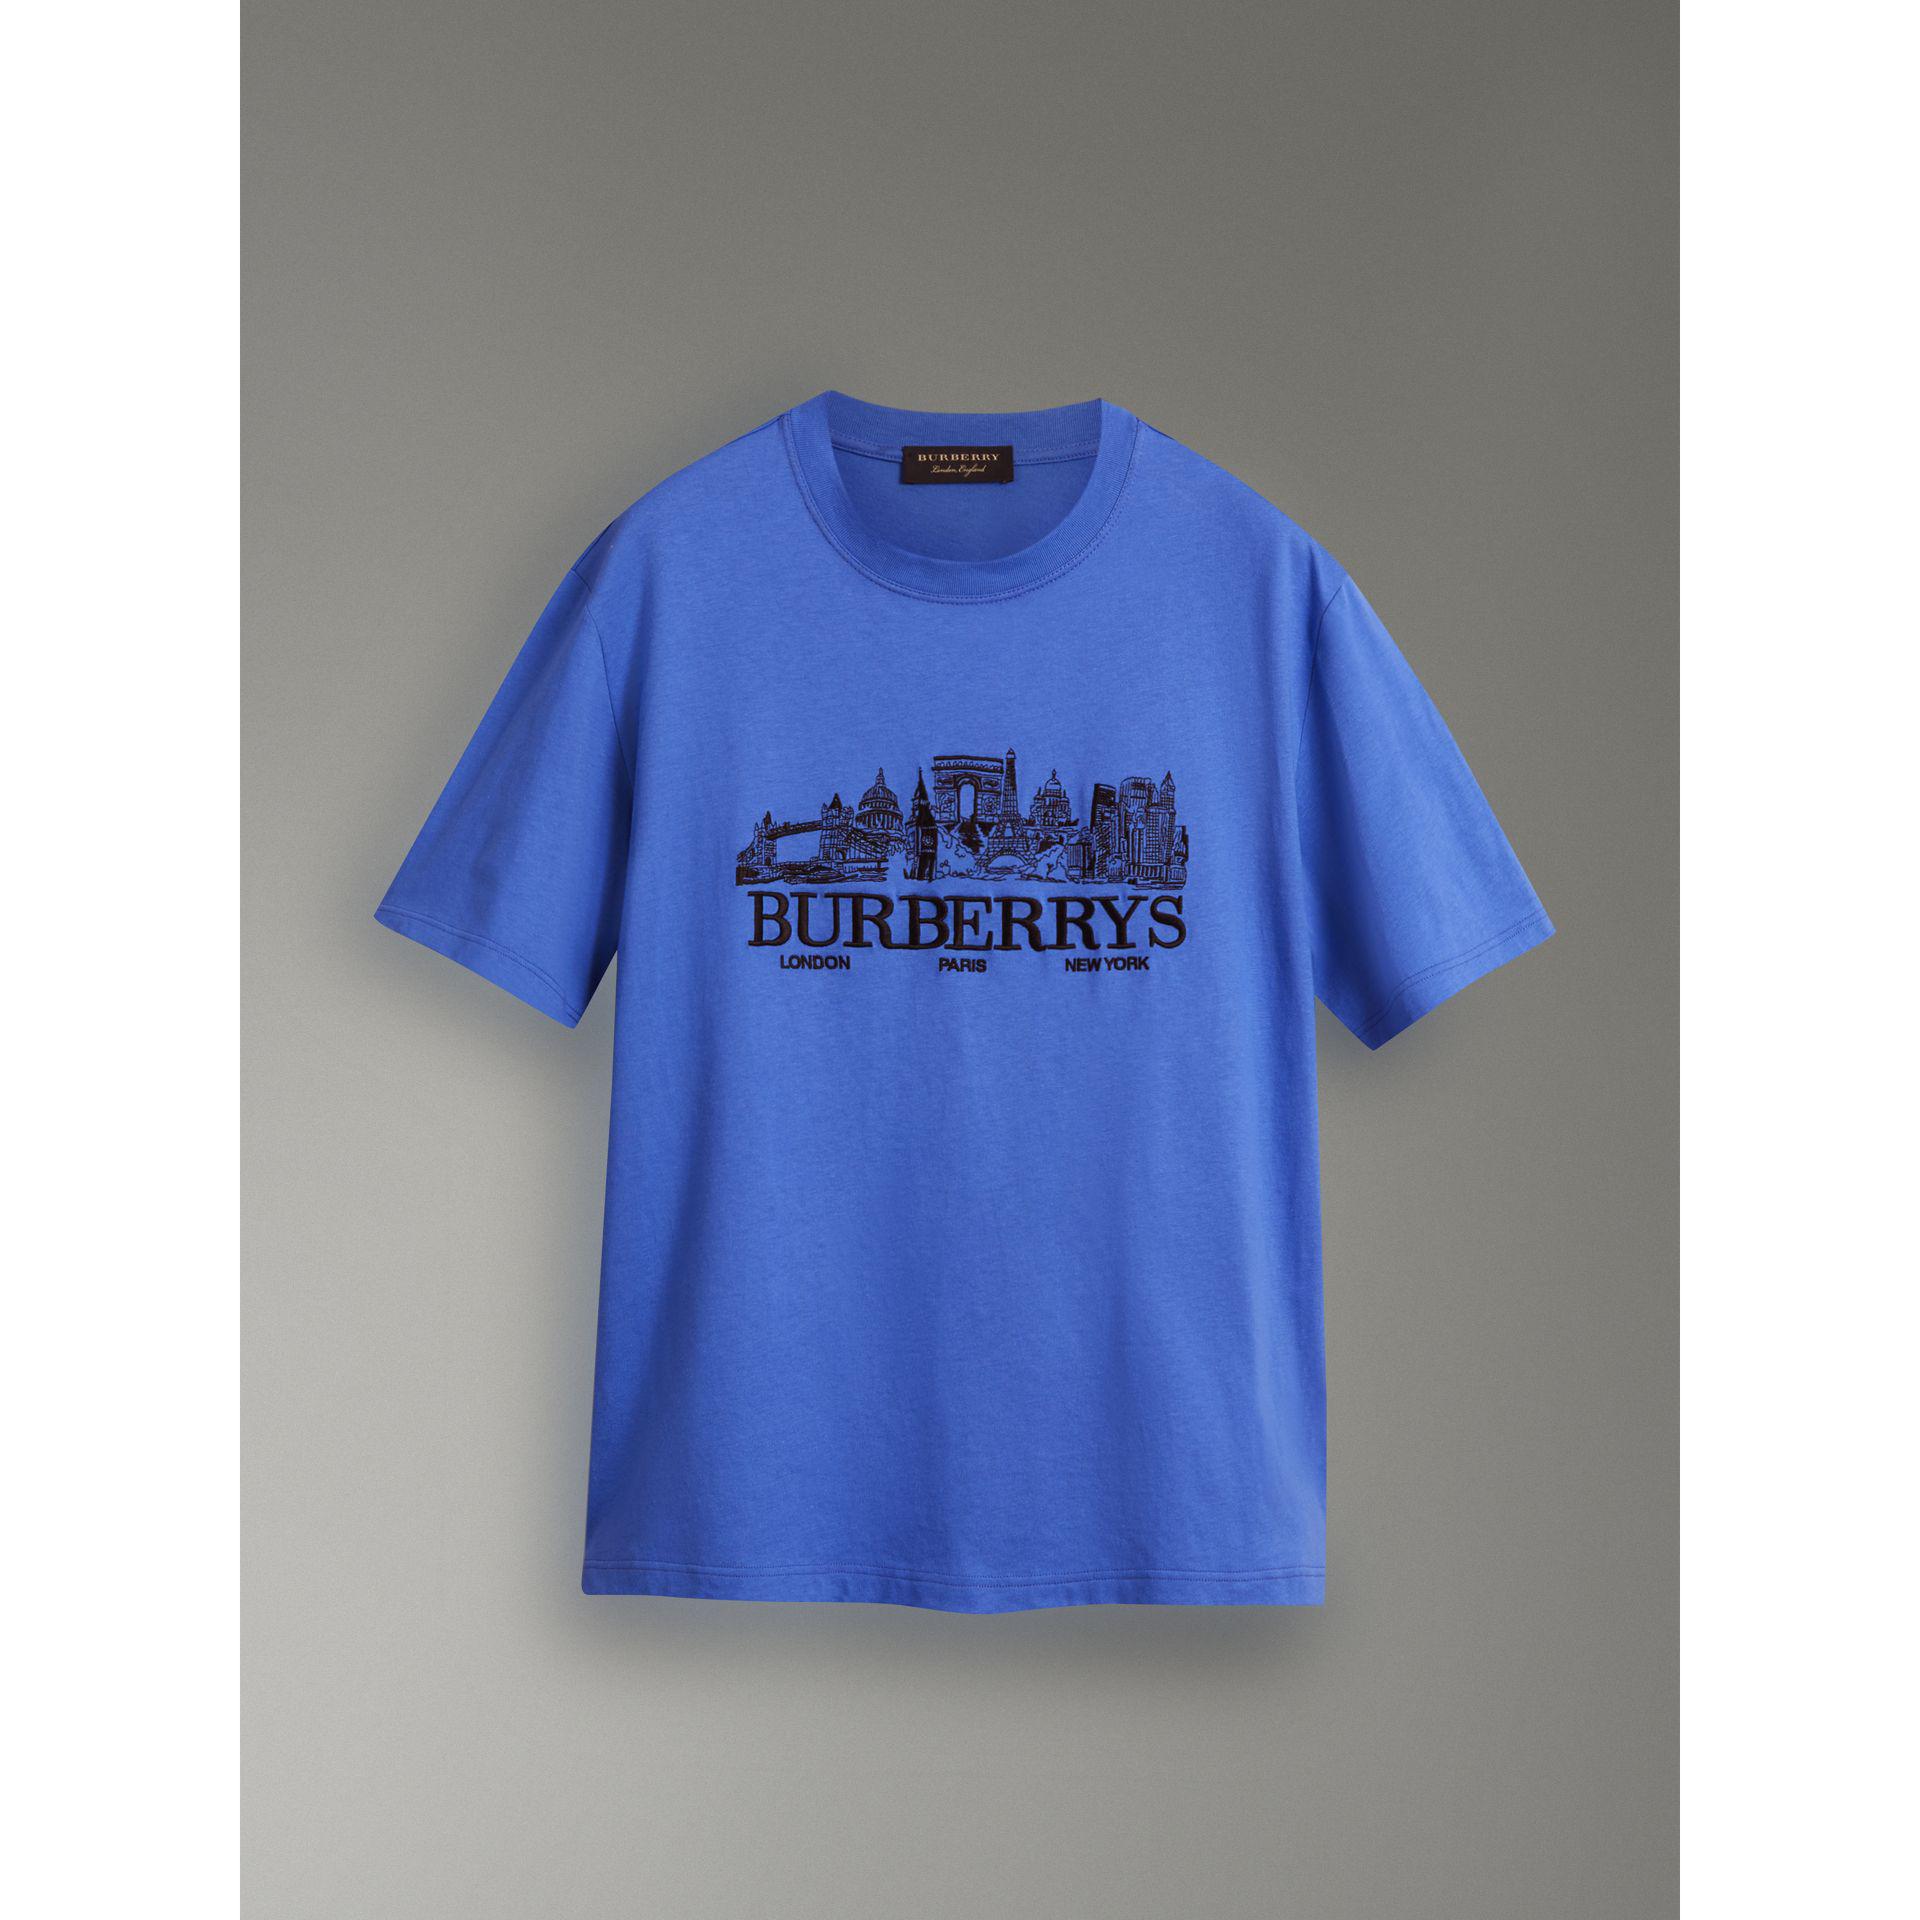 AJh,burberry blue t shirt,hrdsindia.org